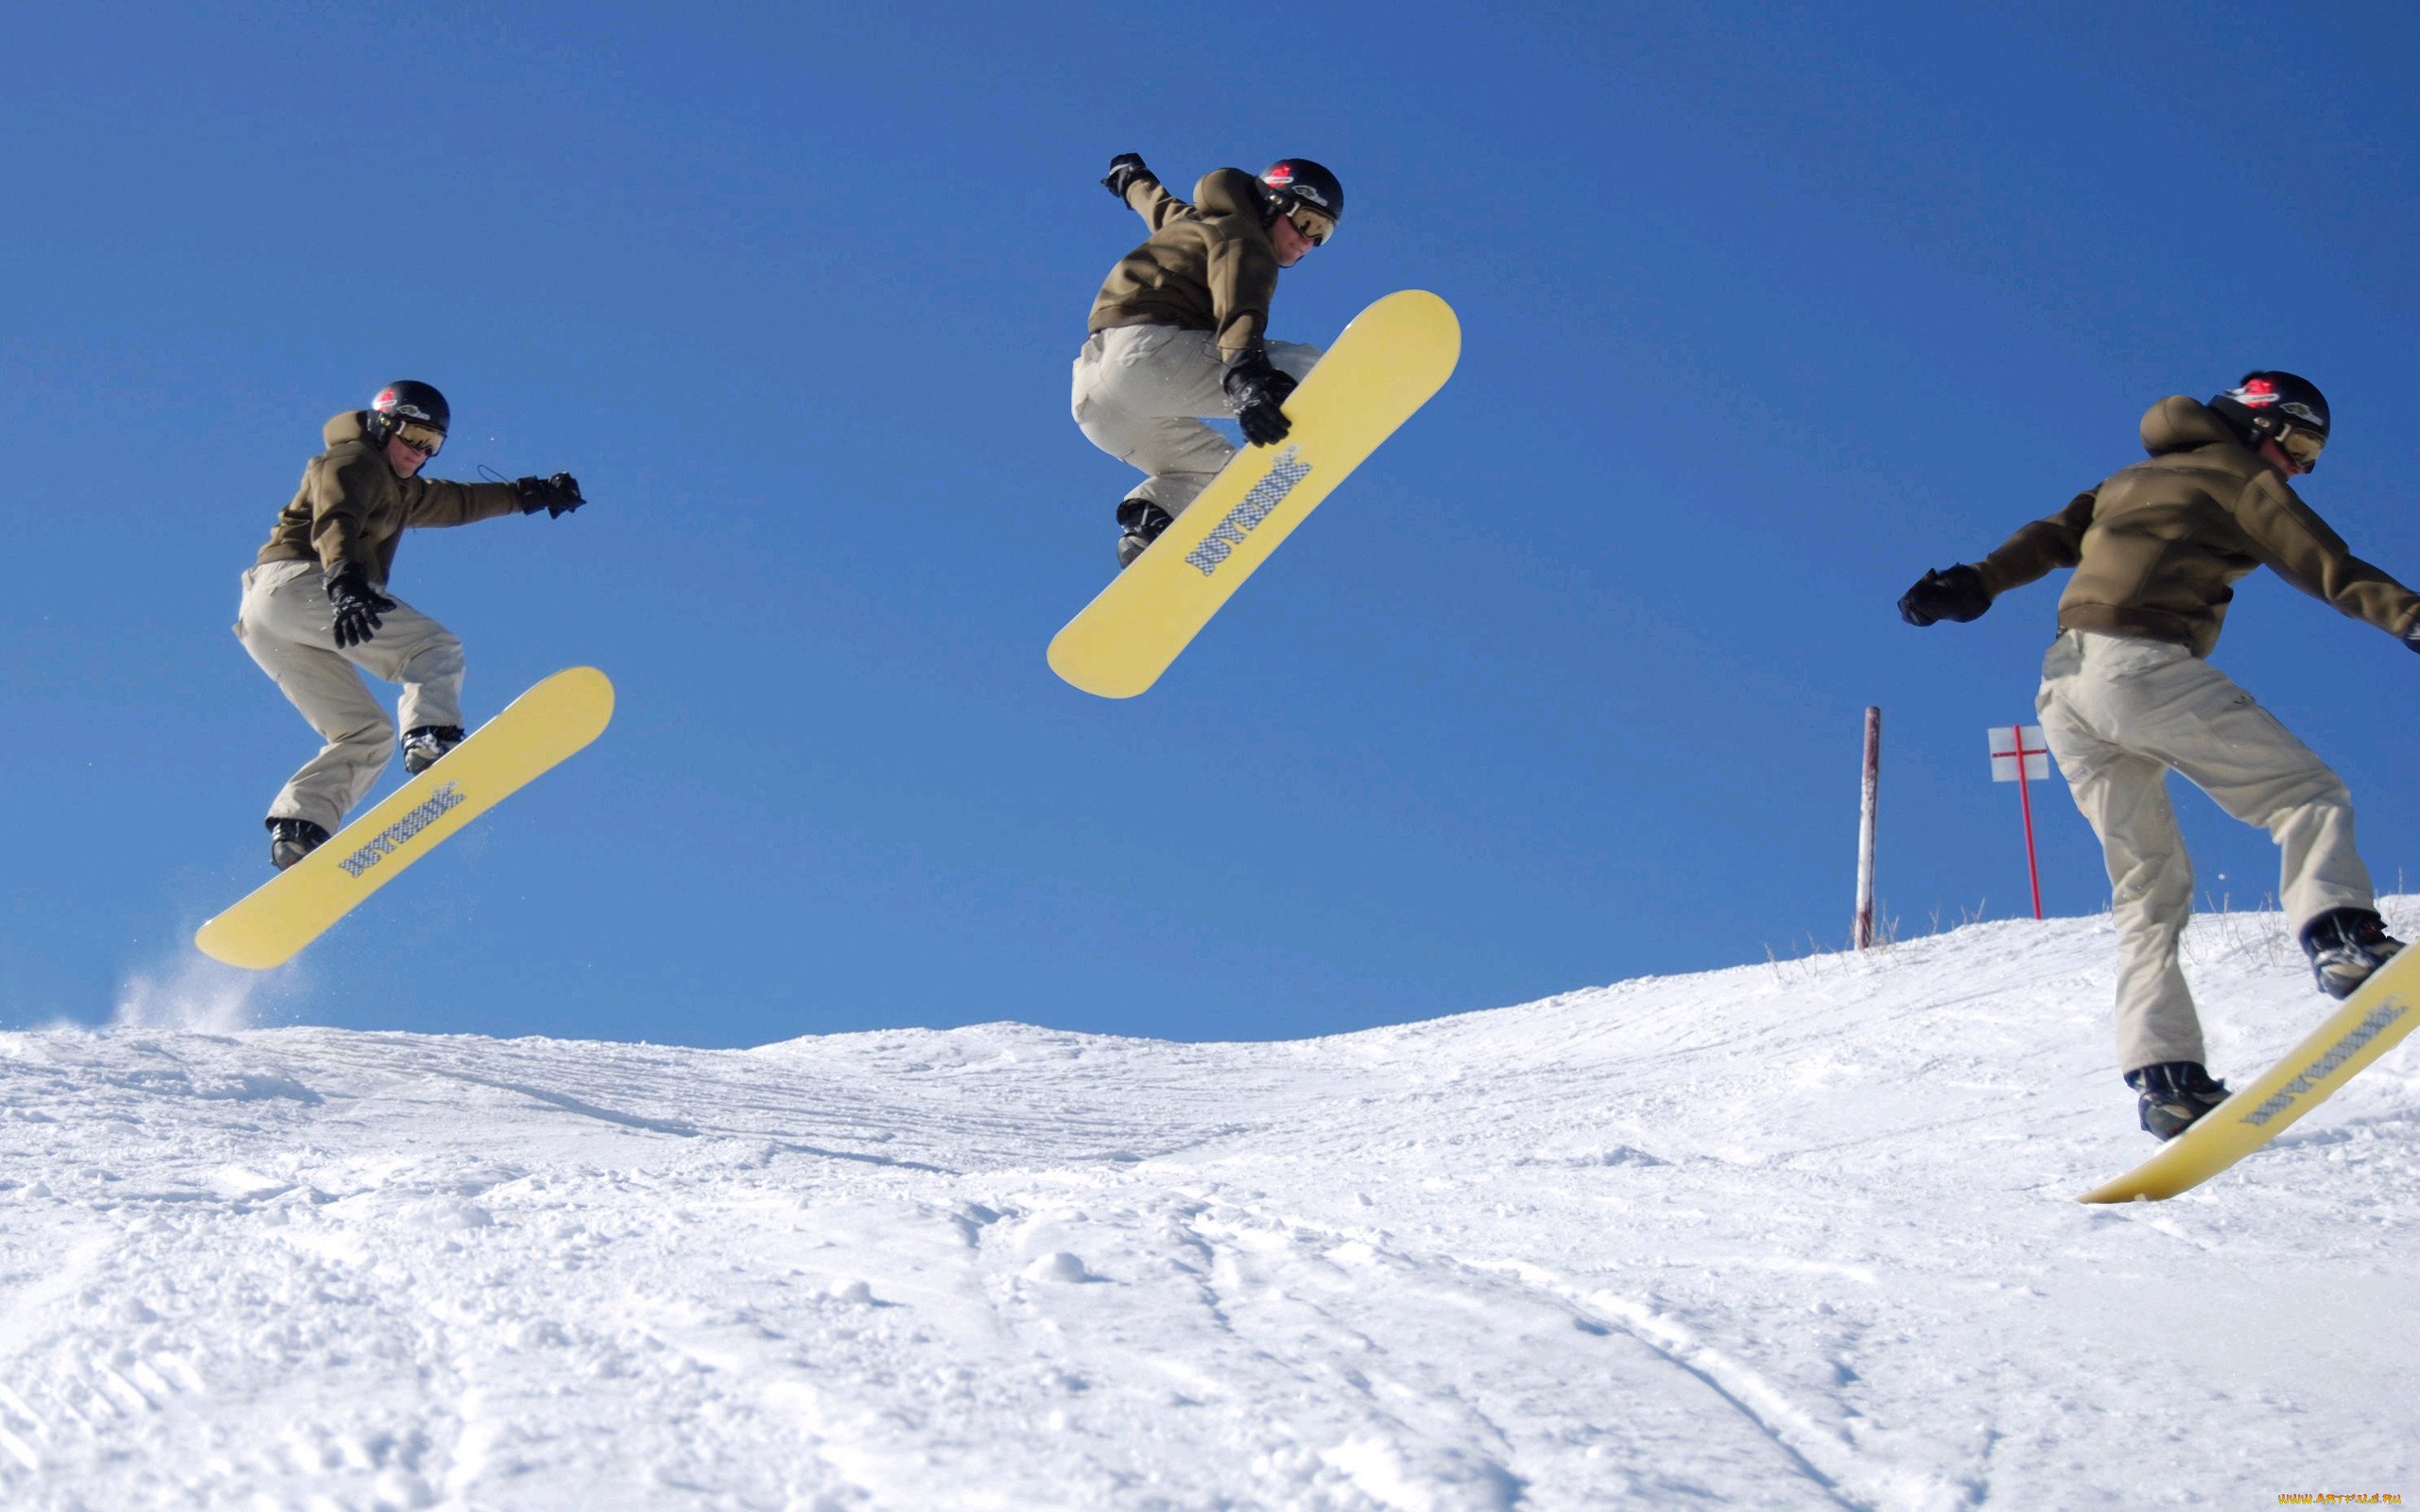 Go snowboarding. Сноубординг. Сноуборд вид спорта. Зимние виды спорта сноубординг. Вид спорта сноубординг для детей.